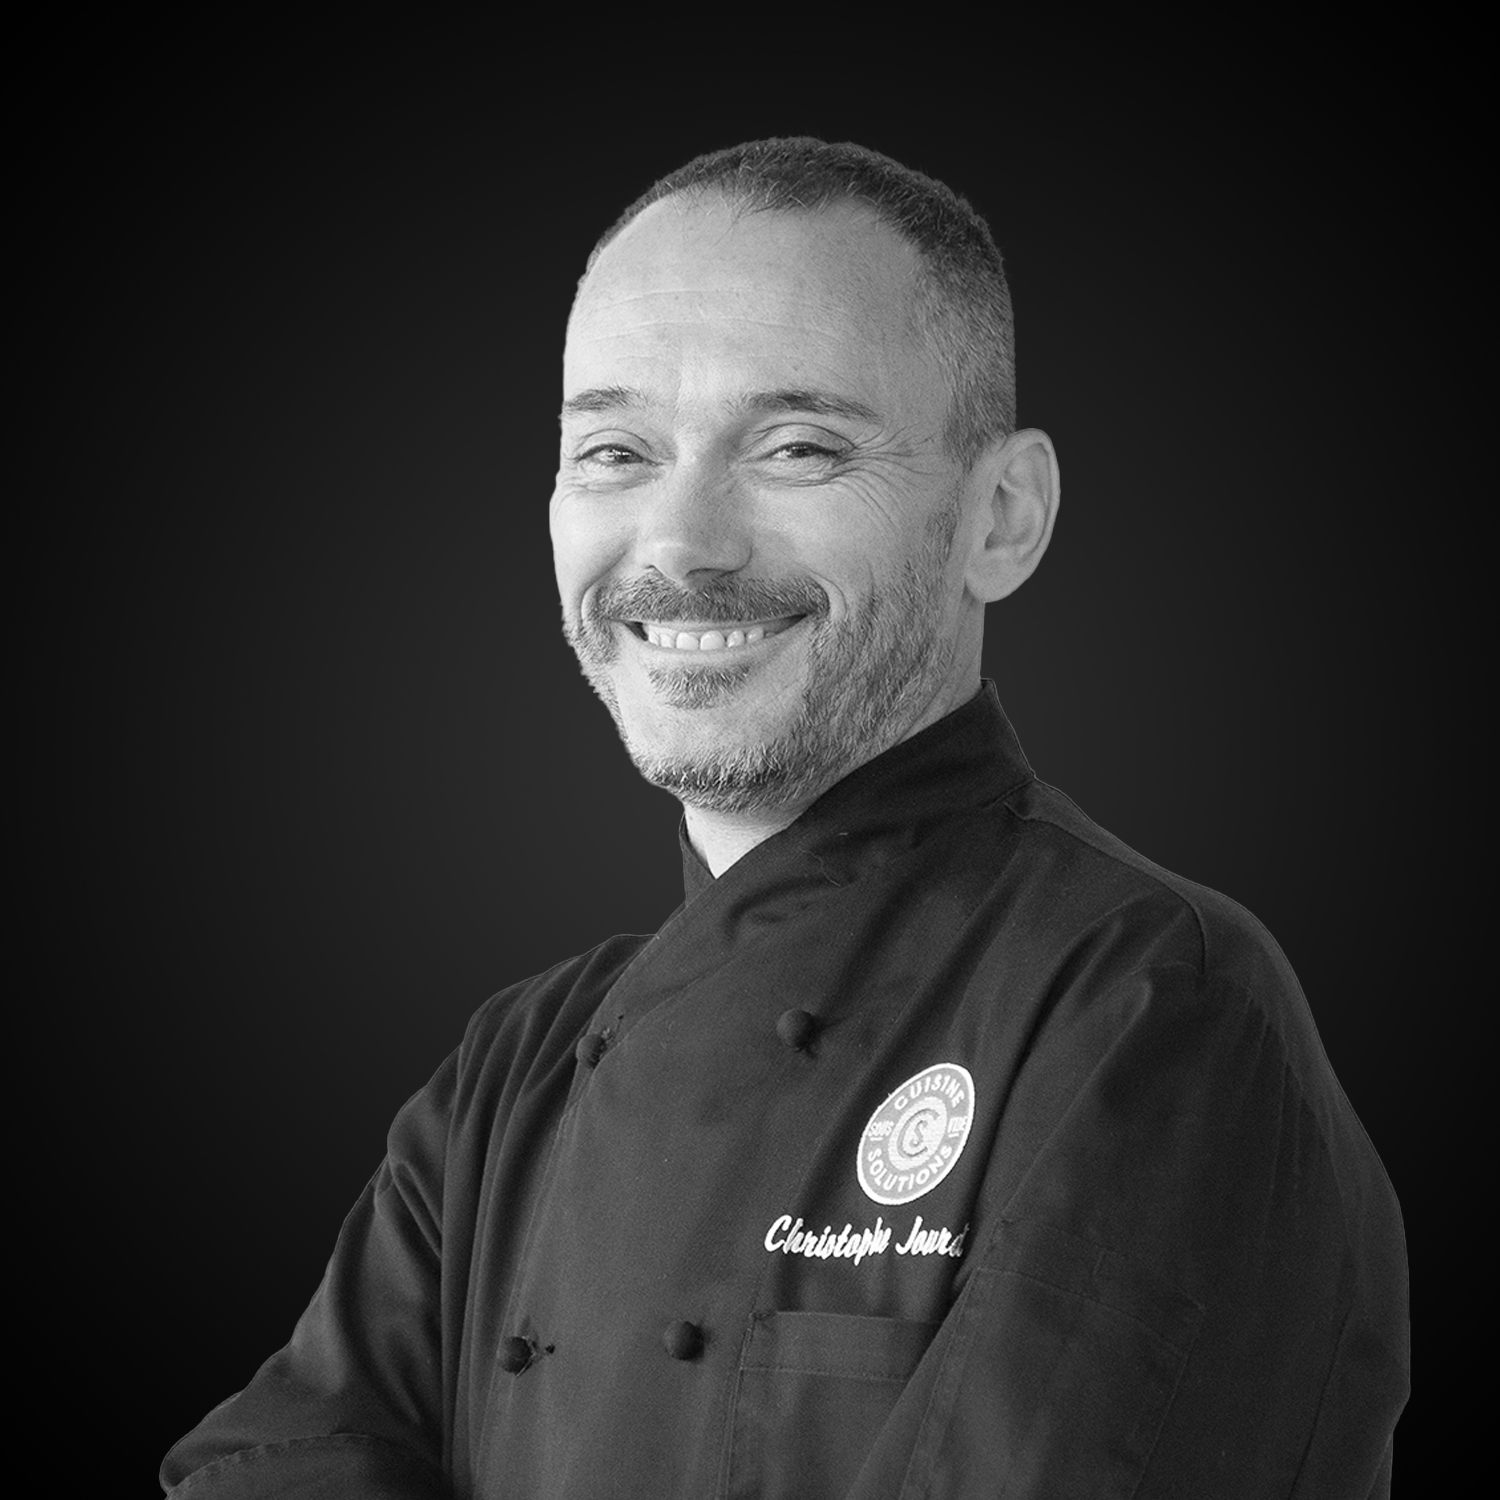 Portrait of Chef Christophe Jourdin